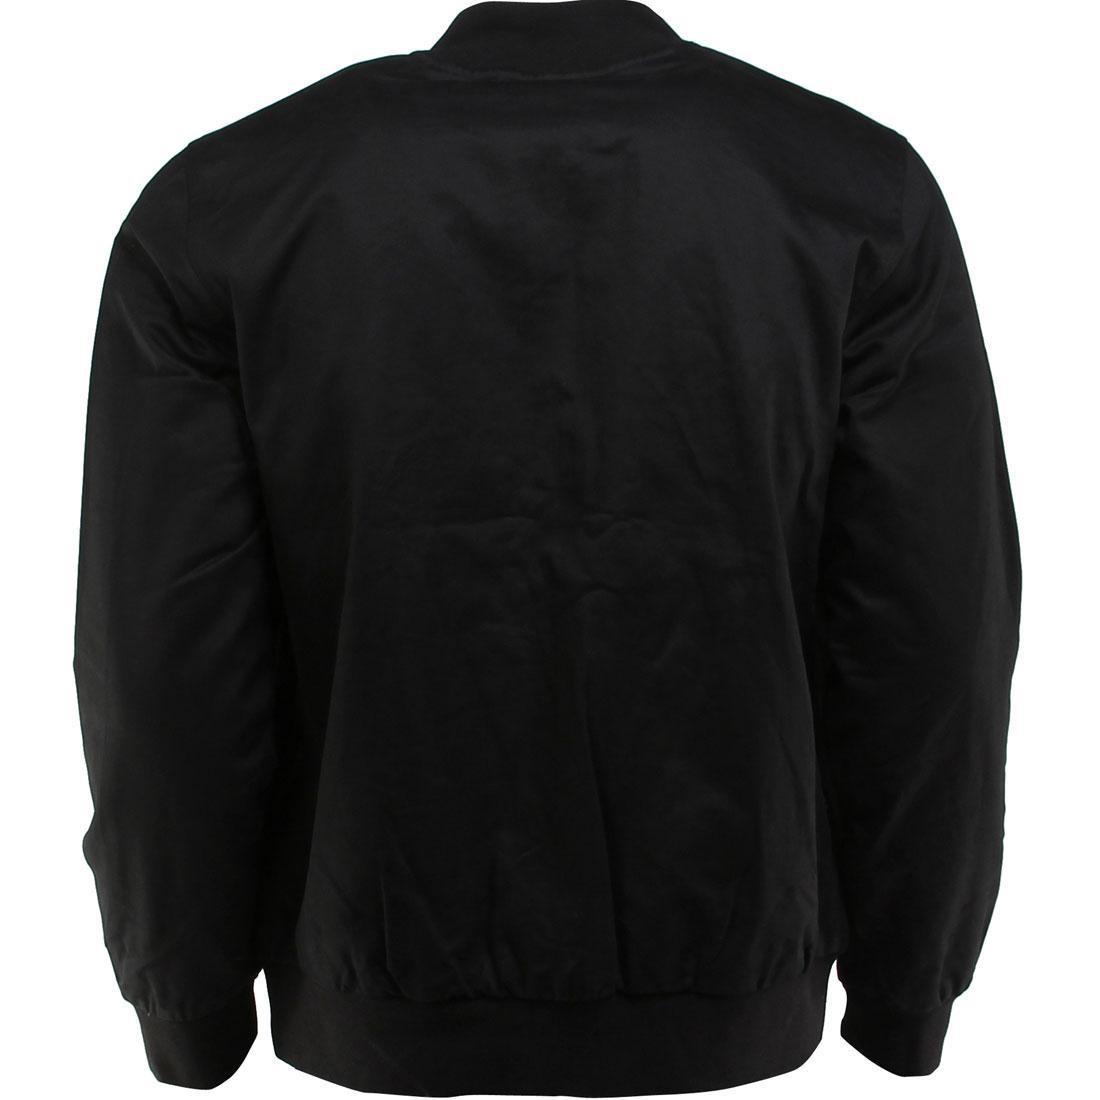 BAIT Reversible Work Jacket (black / oxford black)